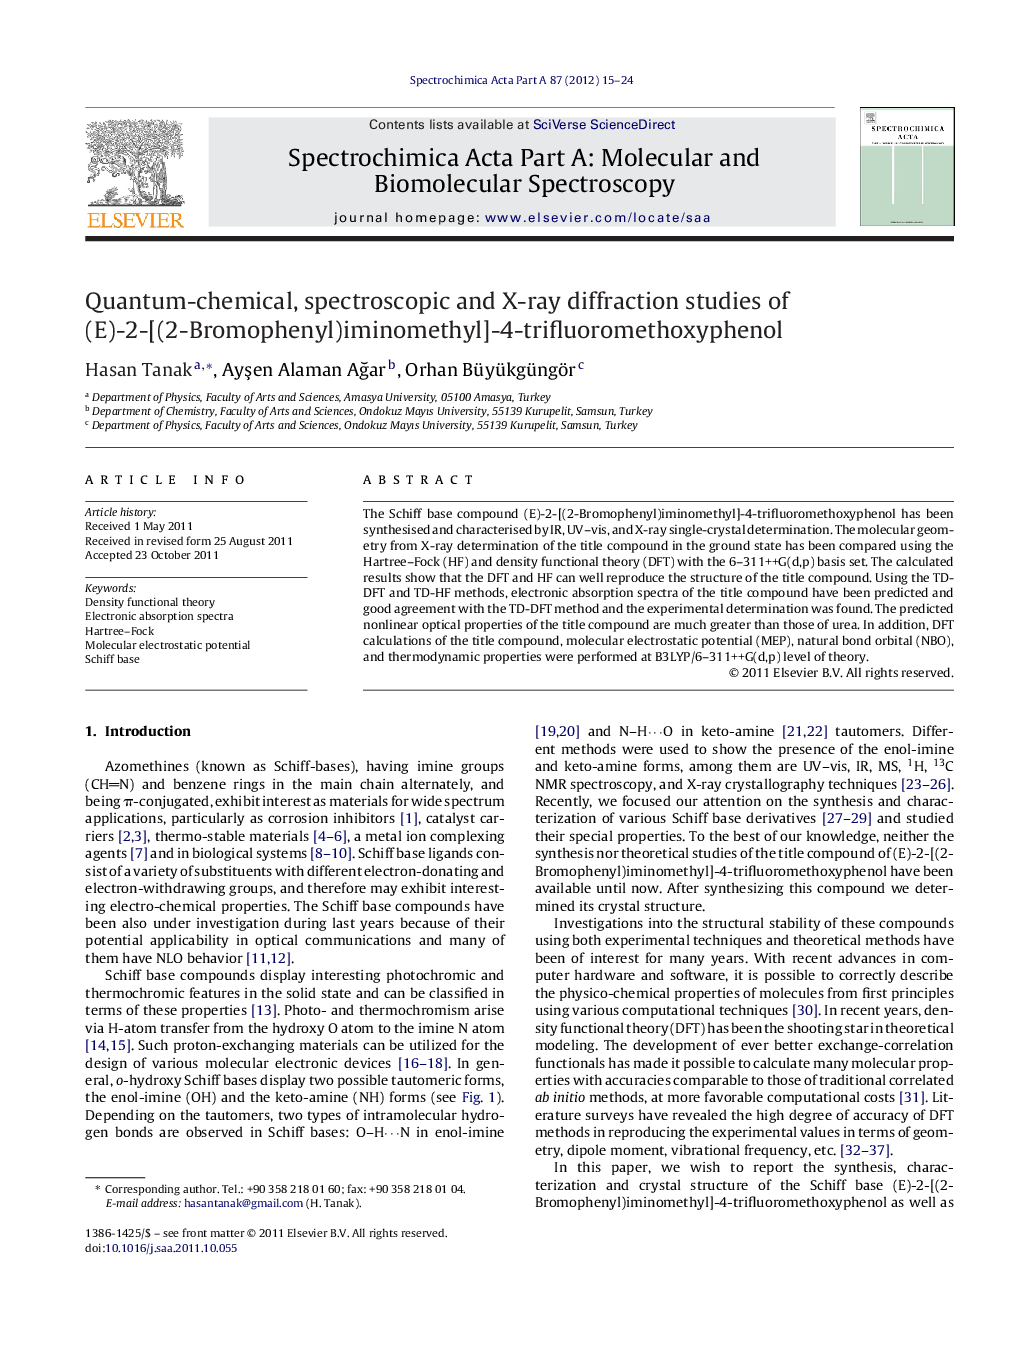 Quantum-chemical, spectroscopic and X-ray diffraction studies of (E)-2-[(2-Bromophenyl)iminomethyl]-4-trifluoromethoxyphenol